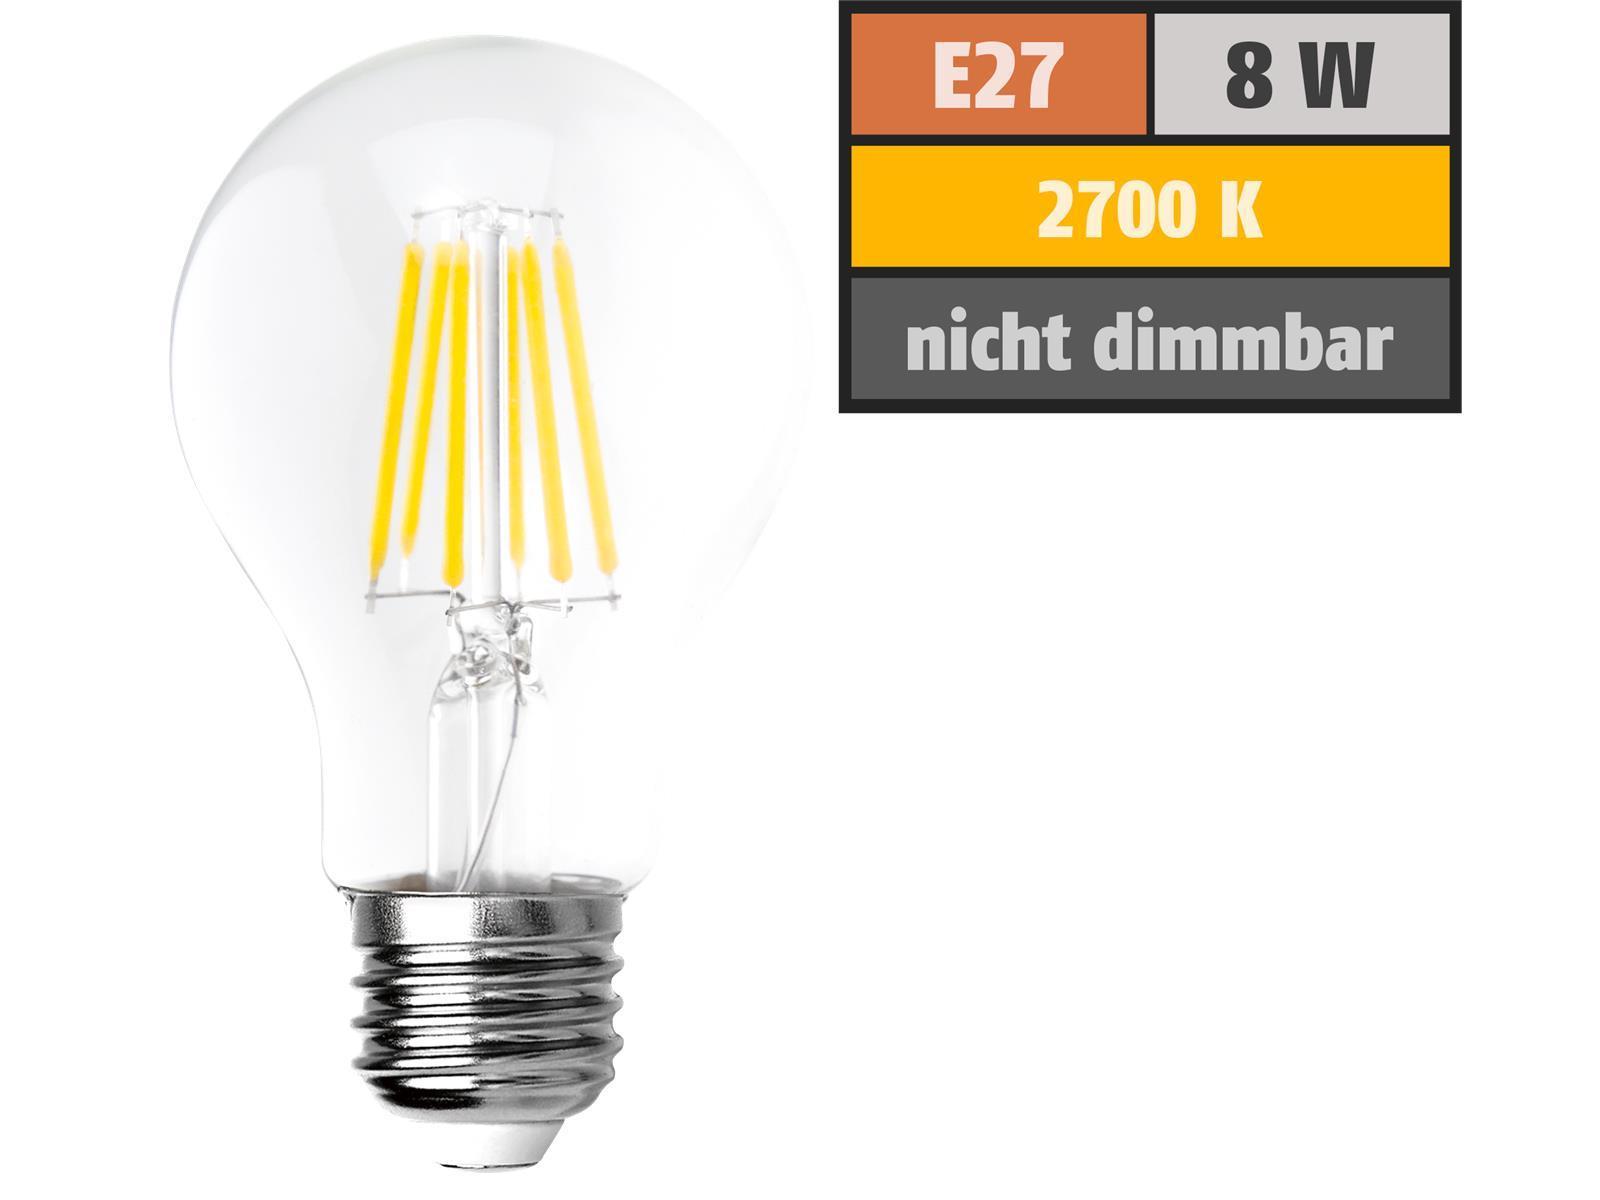 LED Filament Glühlampe McShine ''Filed'', E27, 8W, 1055 lm, warmweiß, klar